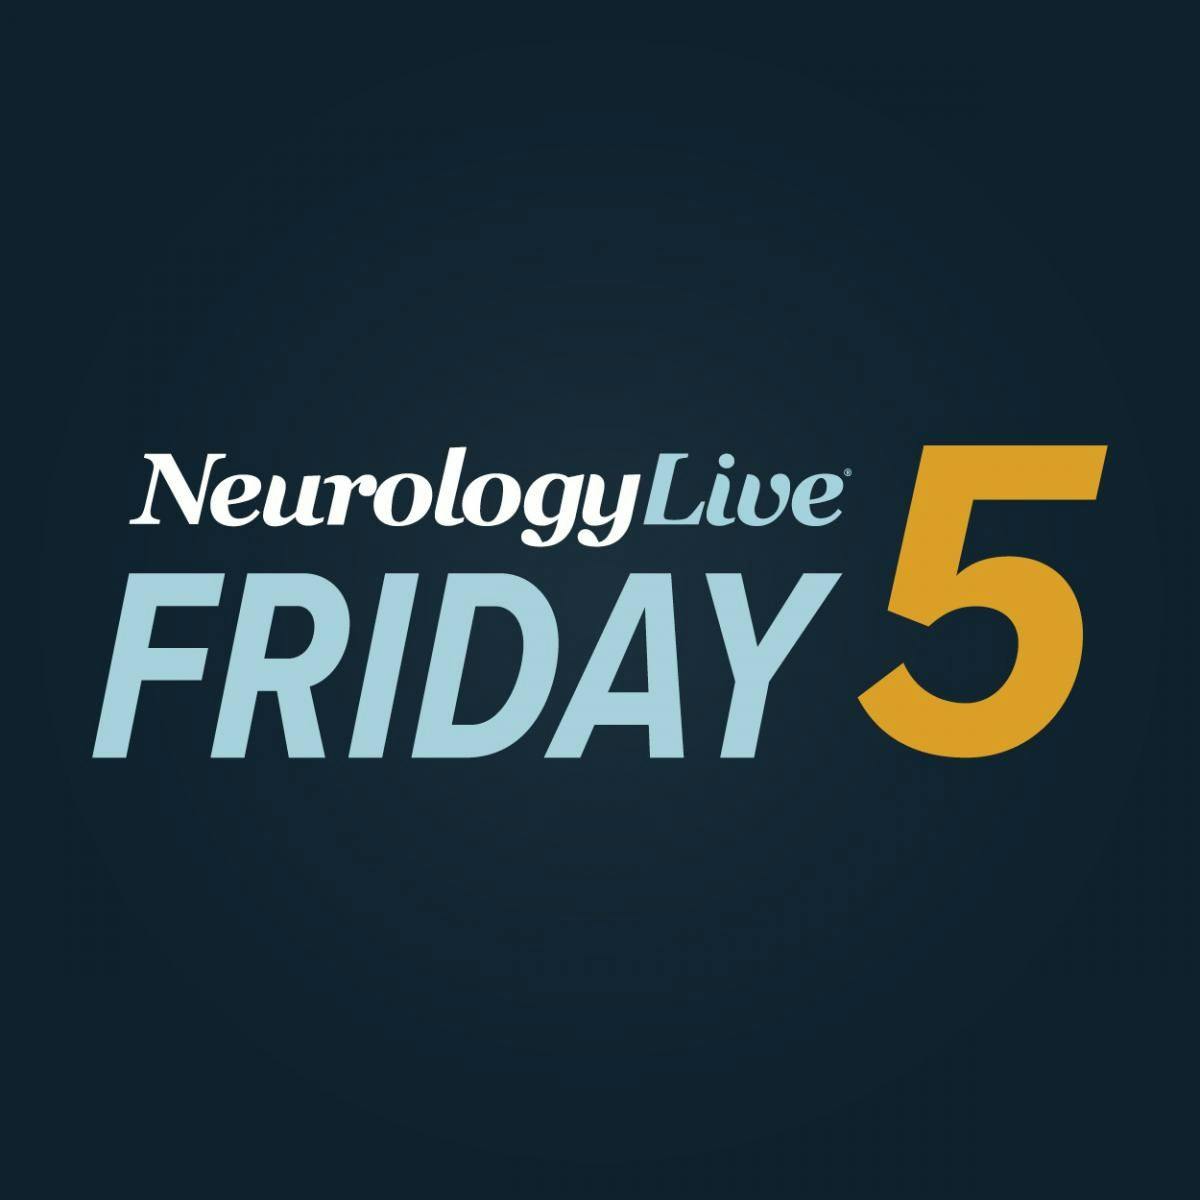 NeurologyLive Friday 5 &mdash; February 14, 2020